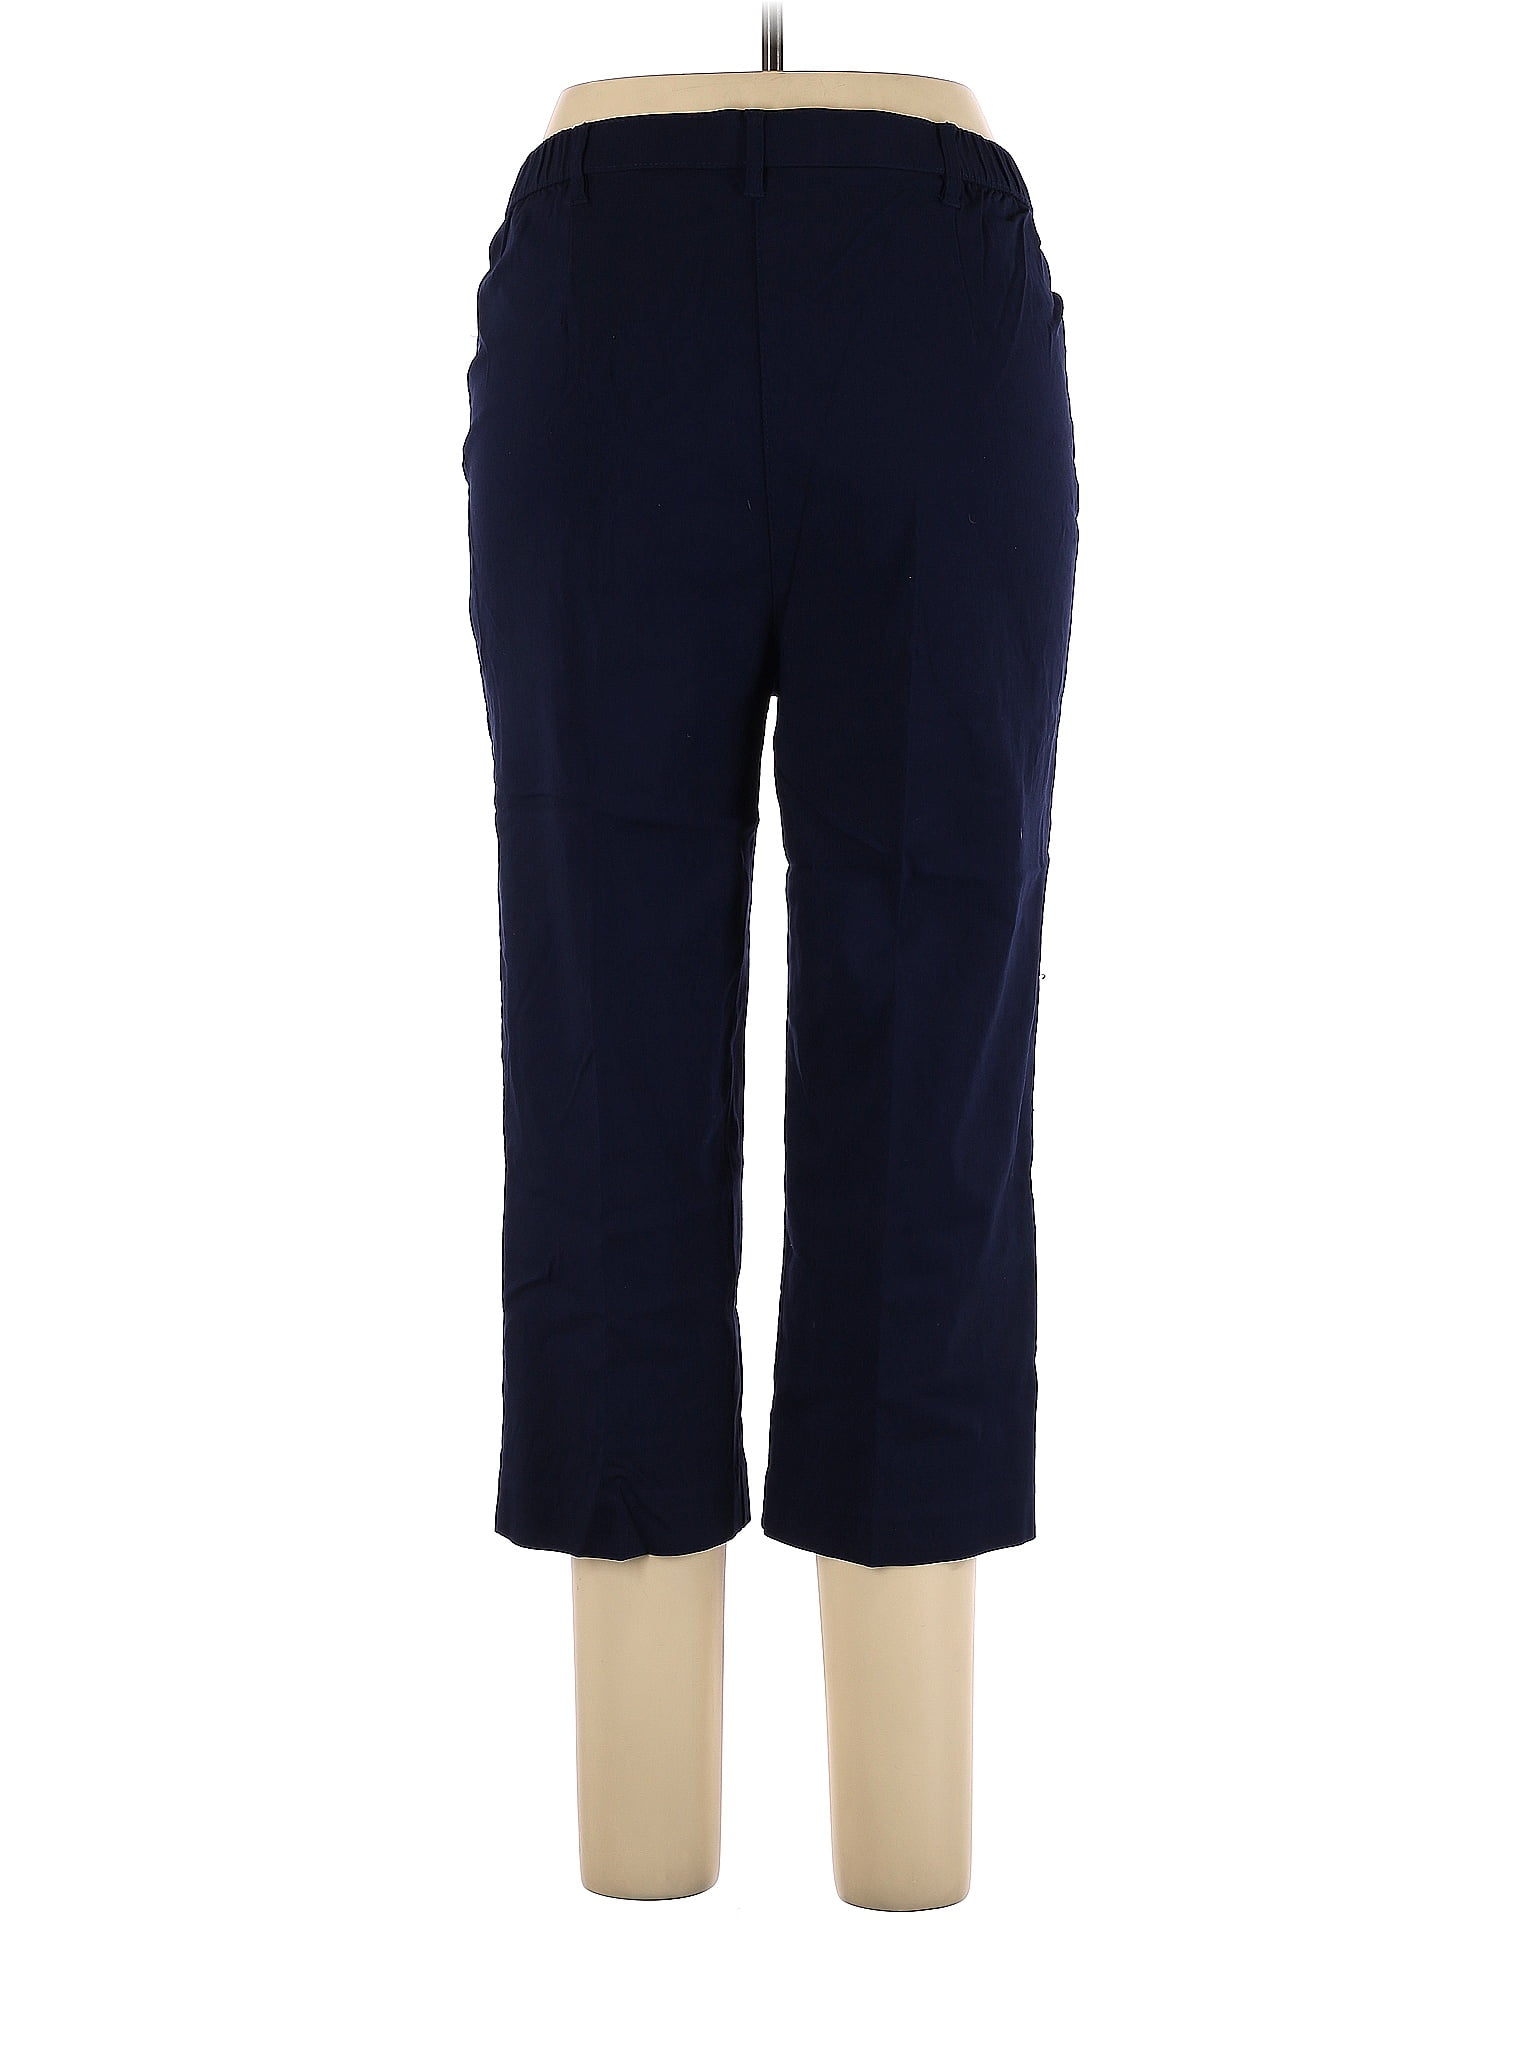 TanJay Brand Petites Dress Pants Stretch Navy Blue Women Size 6P